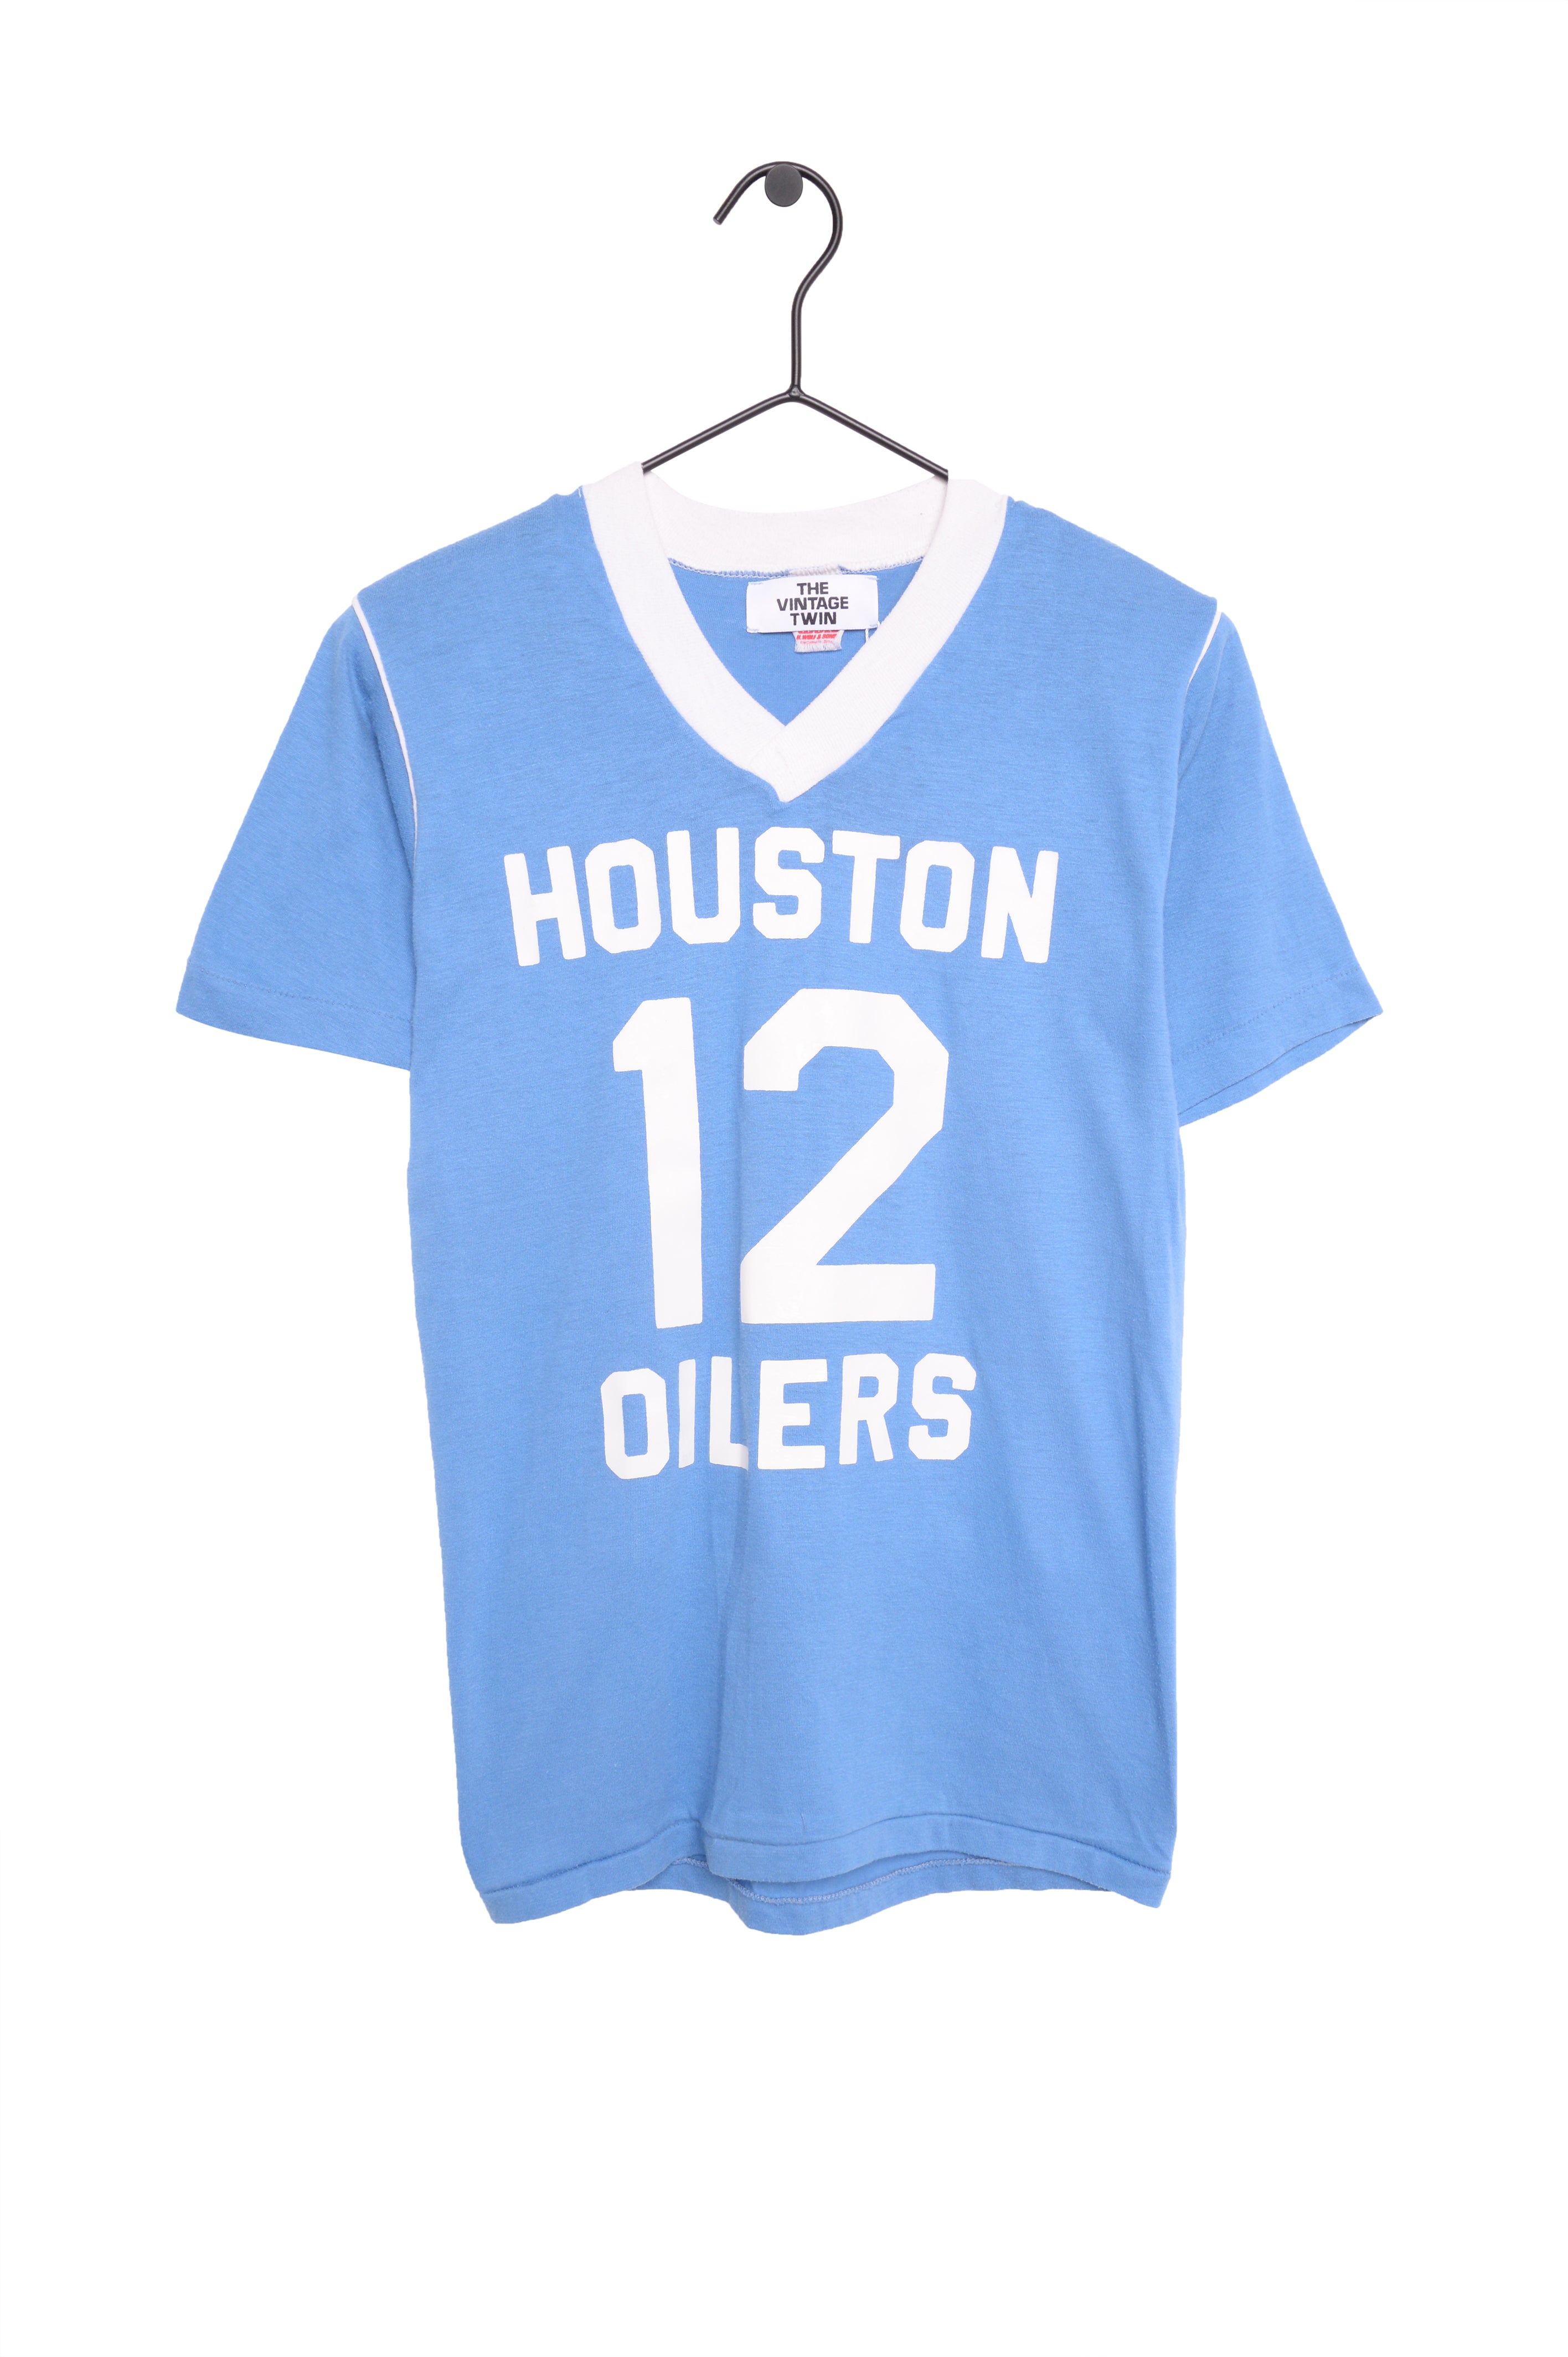 Houston Oilers Sweatshirts & Hoodies for Sale